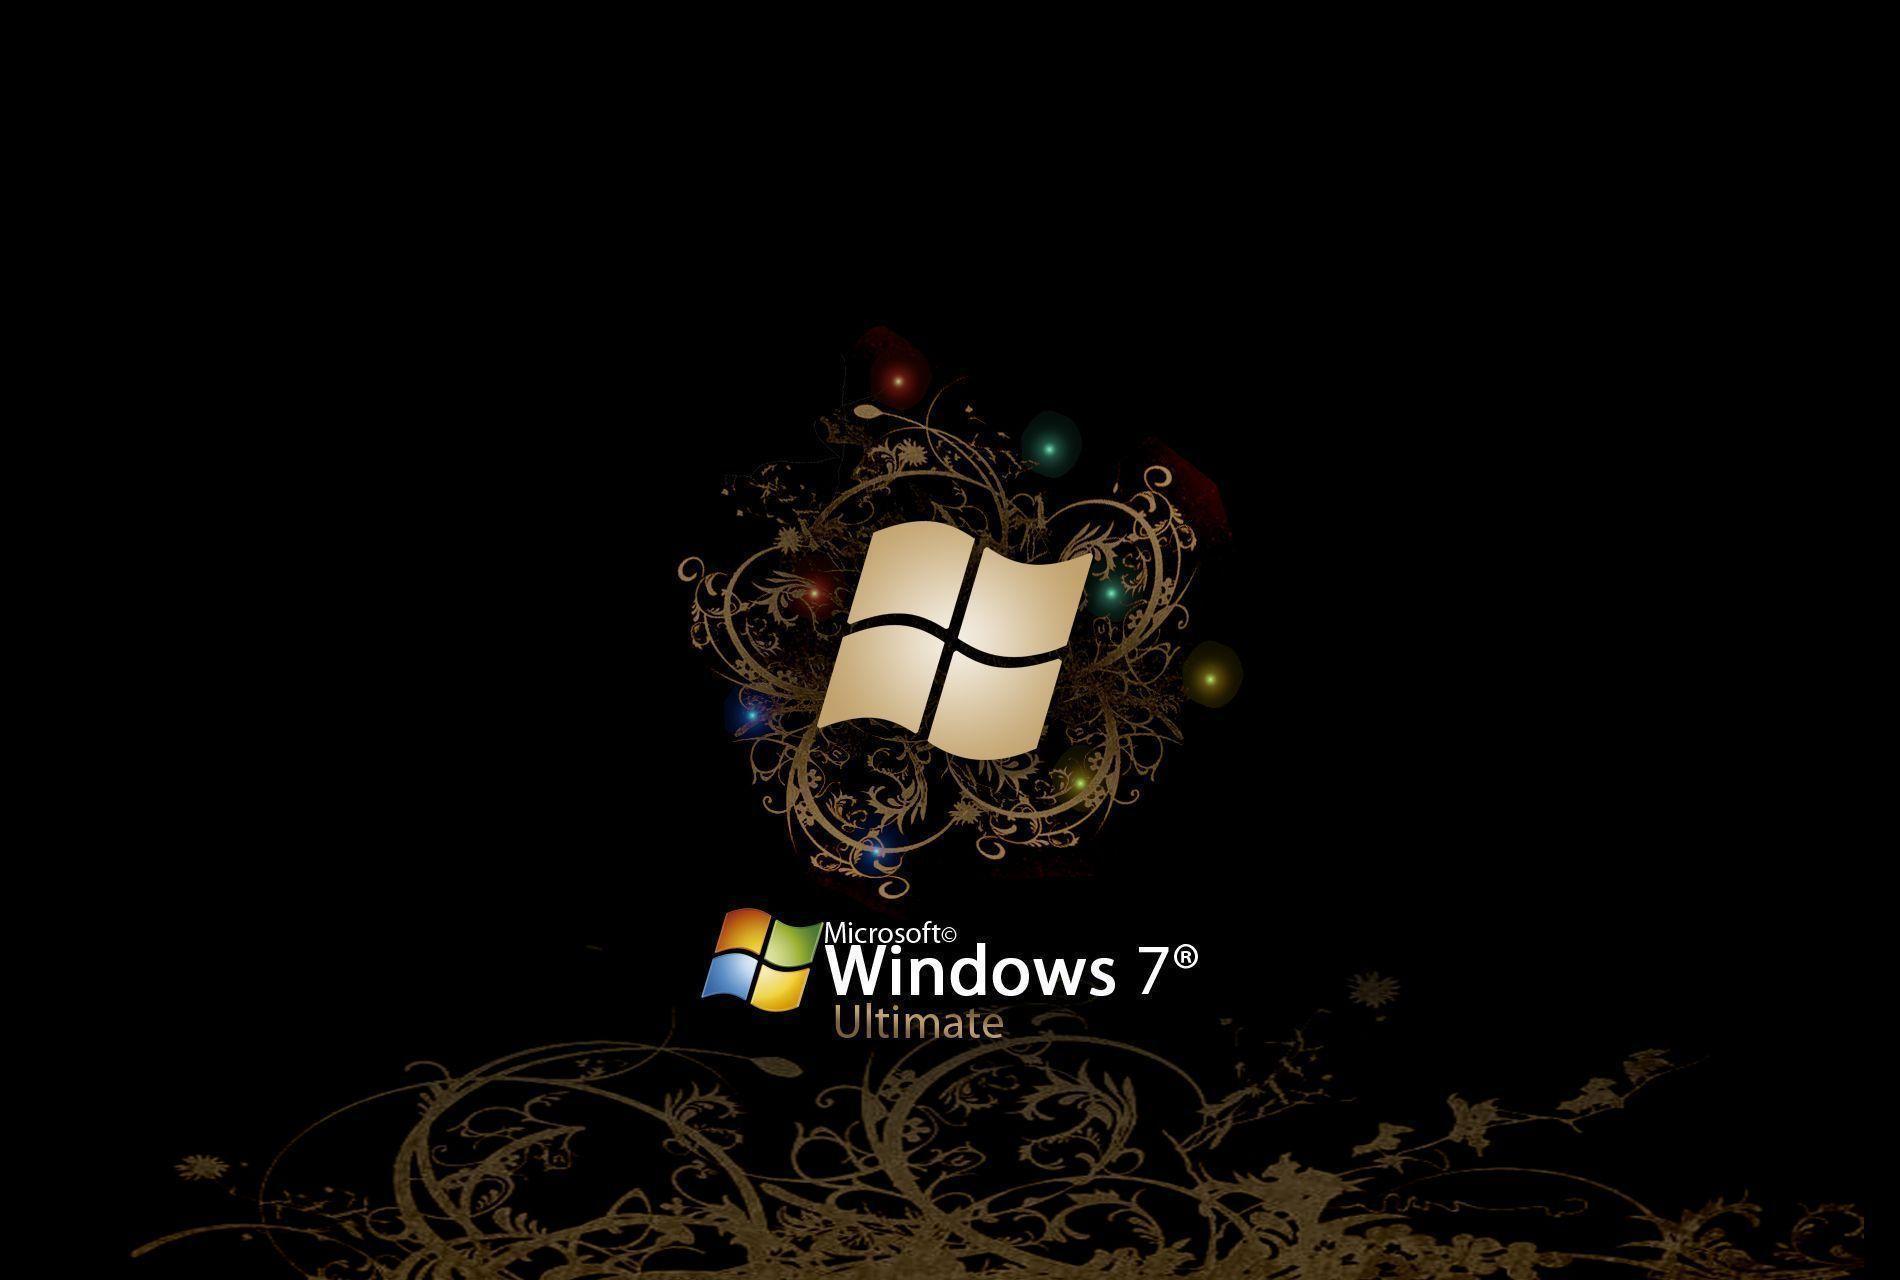 Wallpaper For > Windows 7 Ultimate Wallpaper 1080p